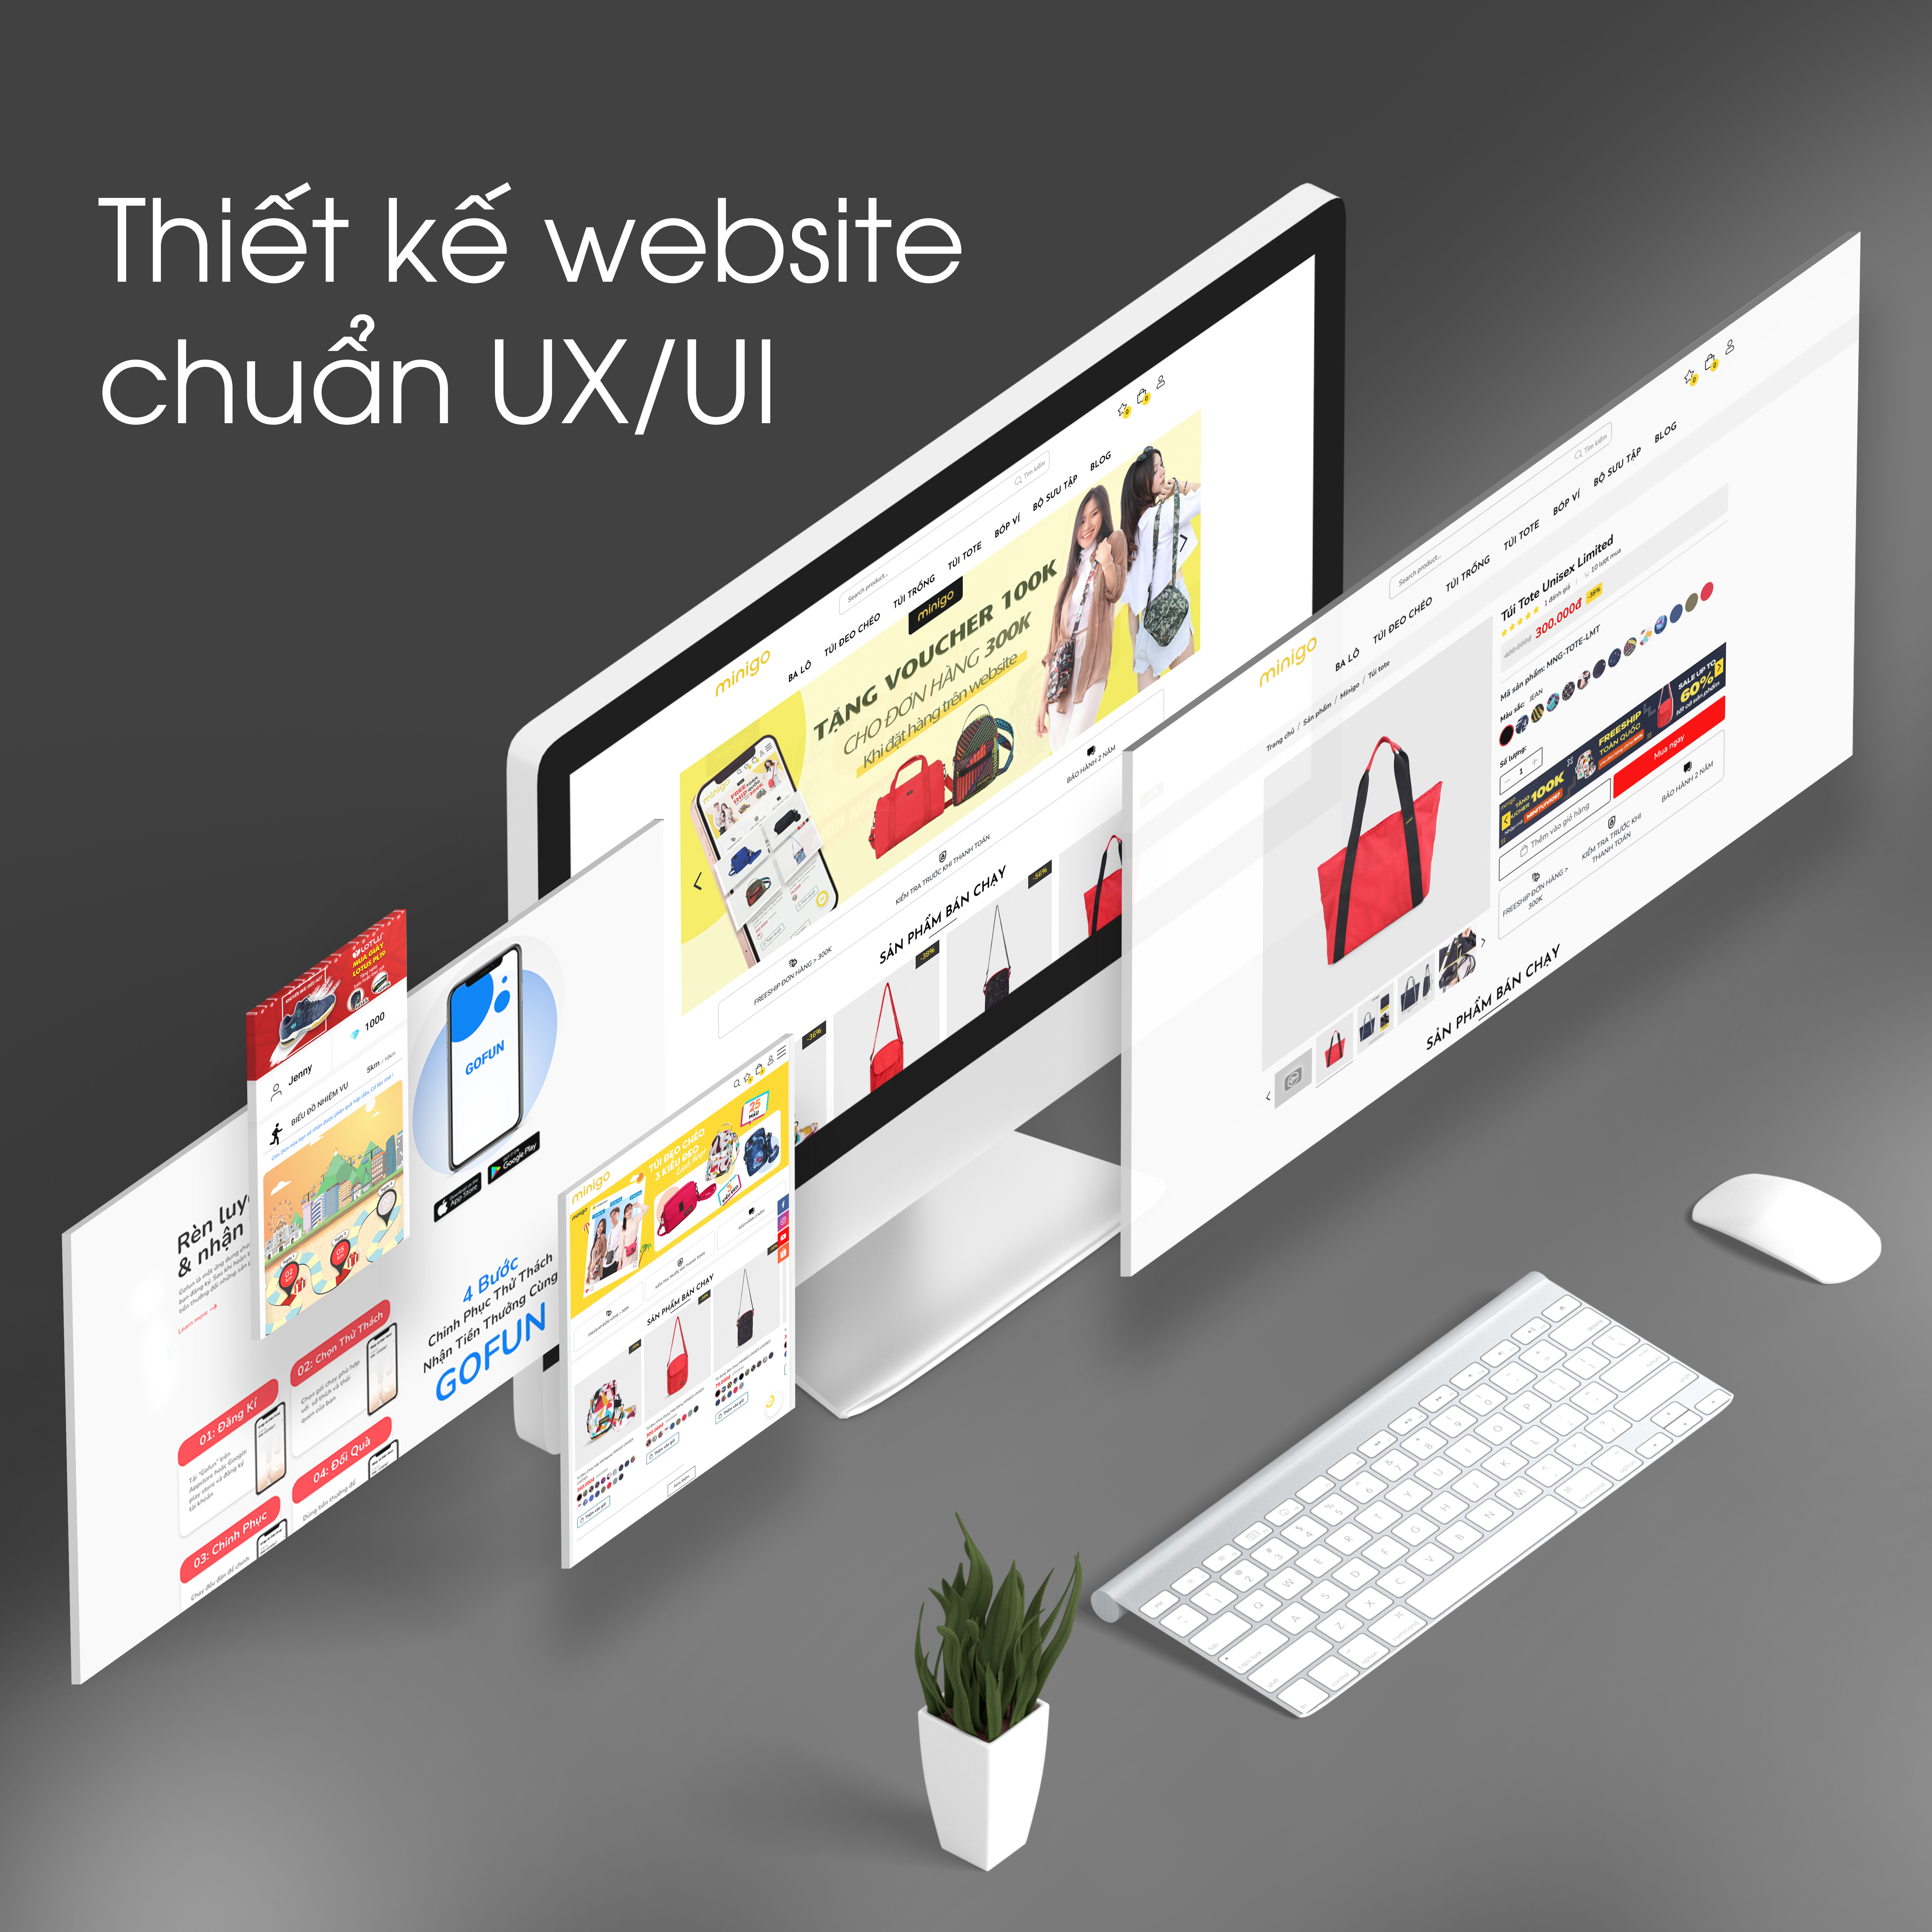 Thiết kế website chuẩn UX/UI